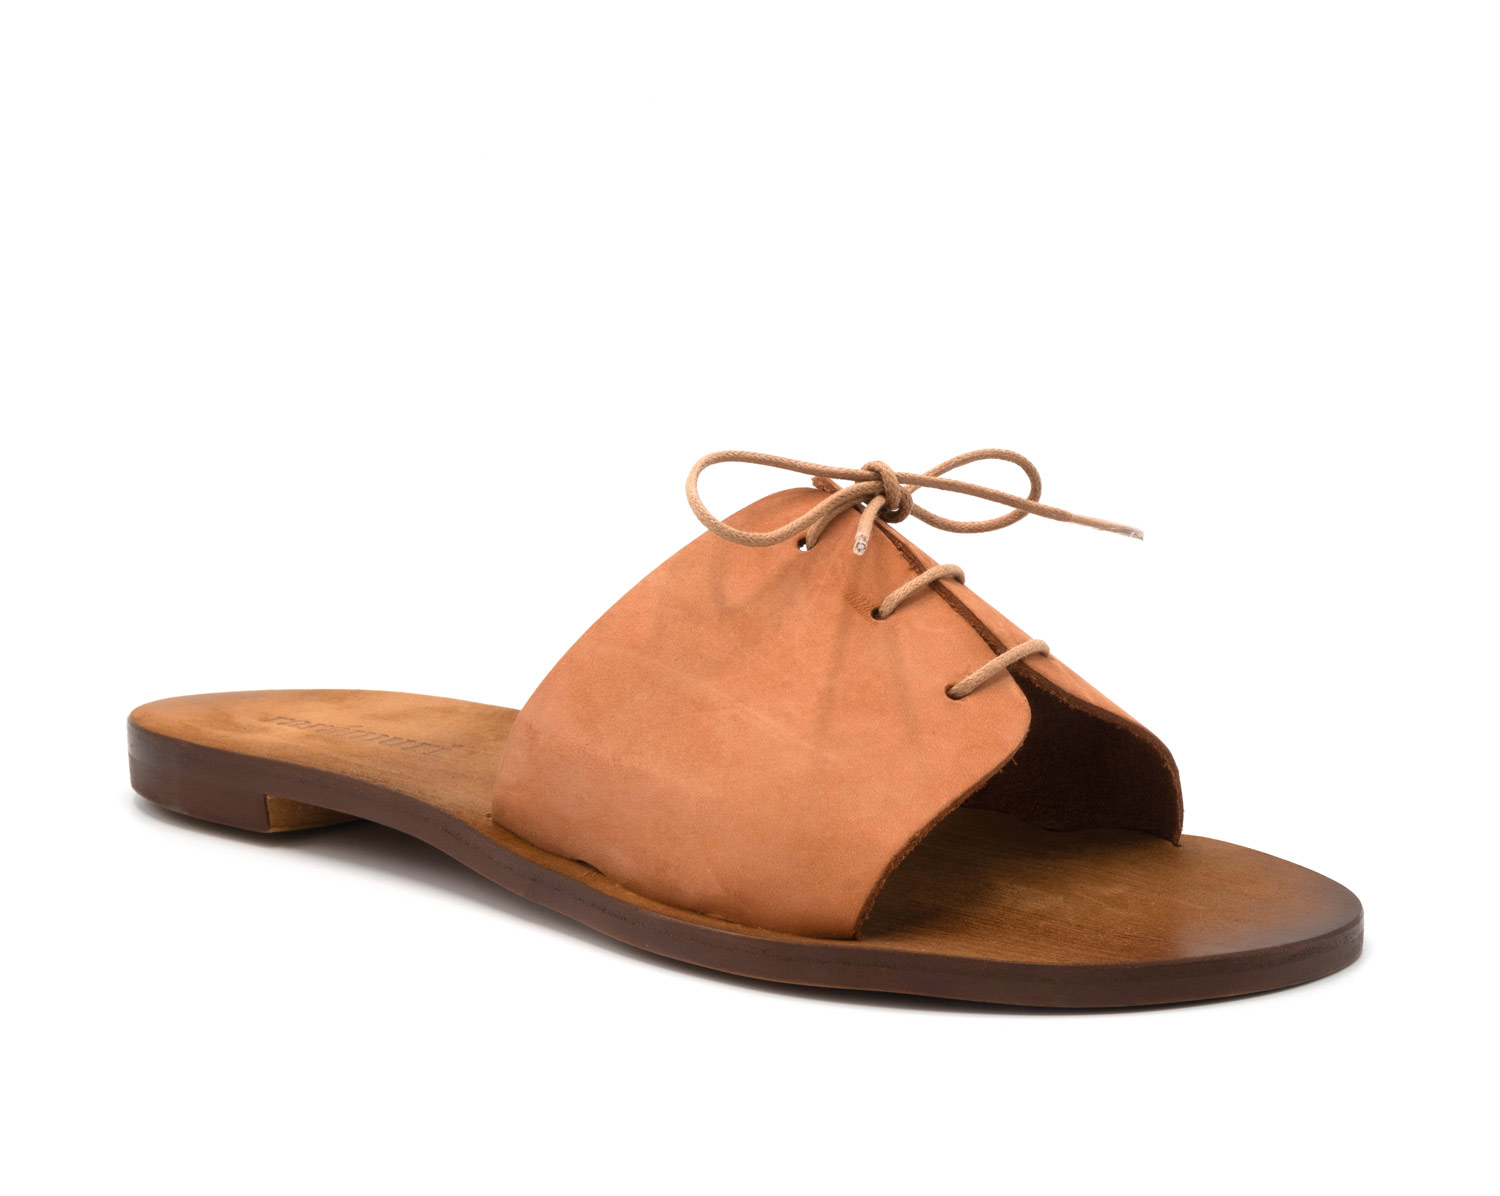 Cali – Cognac Rose – Rarámuri – The Most Comfortable Travel Sandals ...